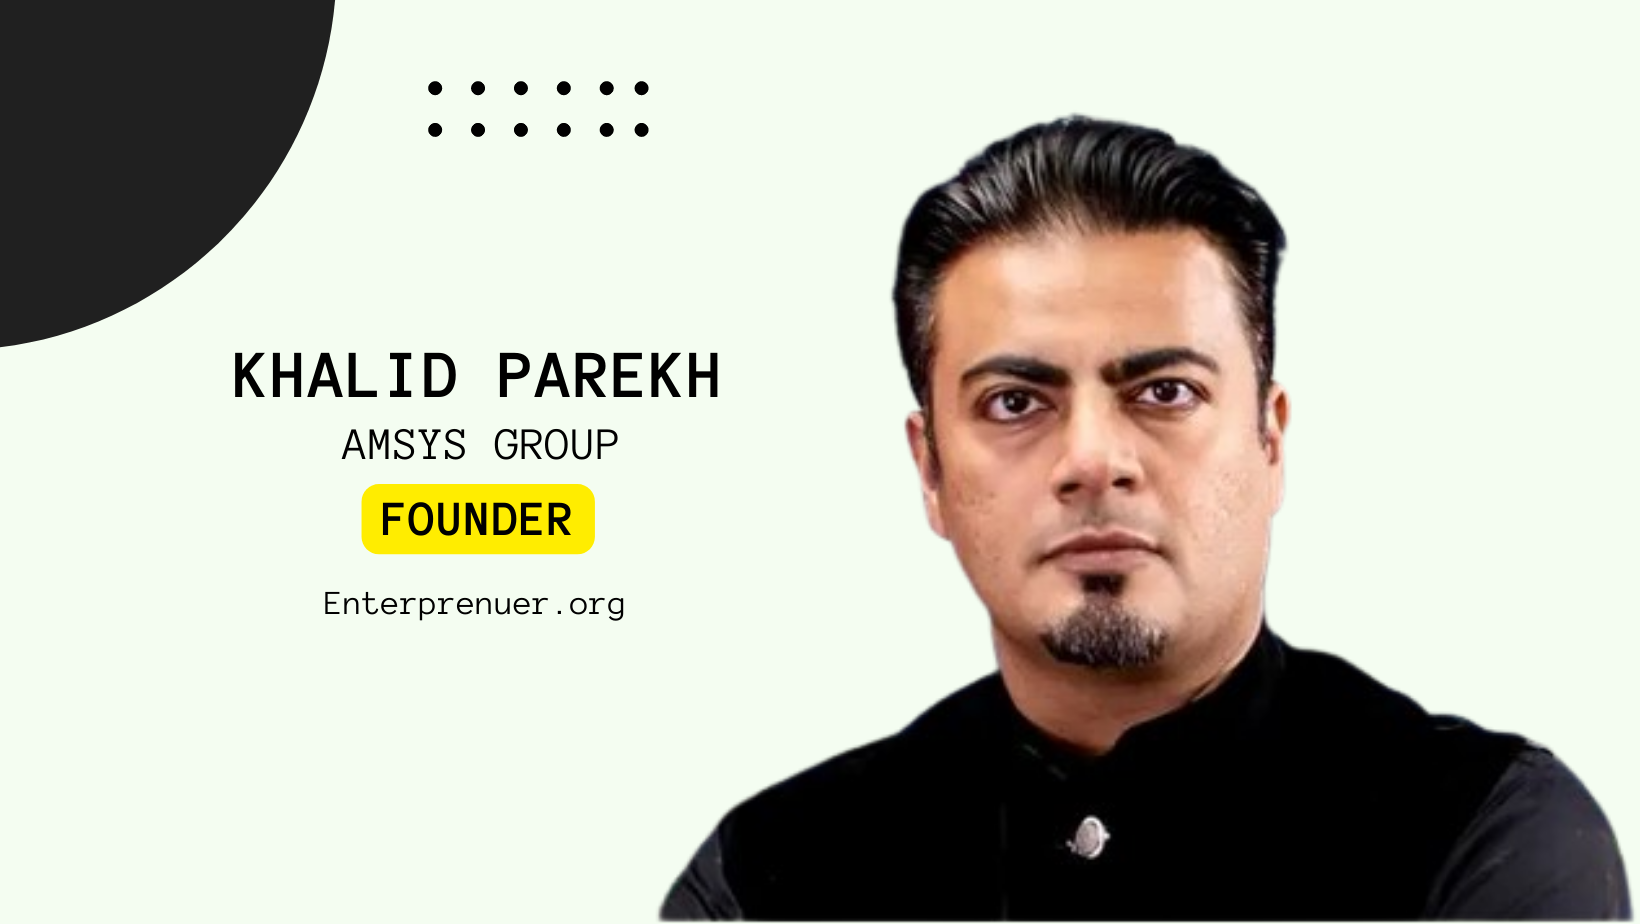 Meet Khalid Parekh, Founder of Amsys Group